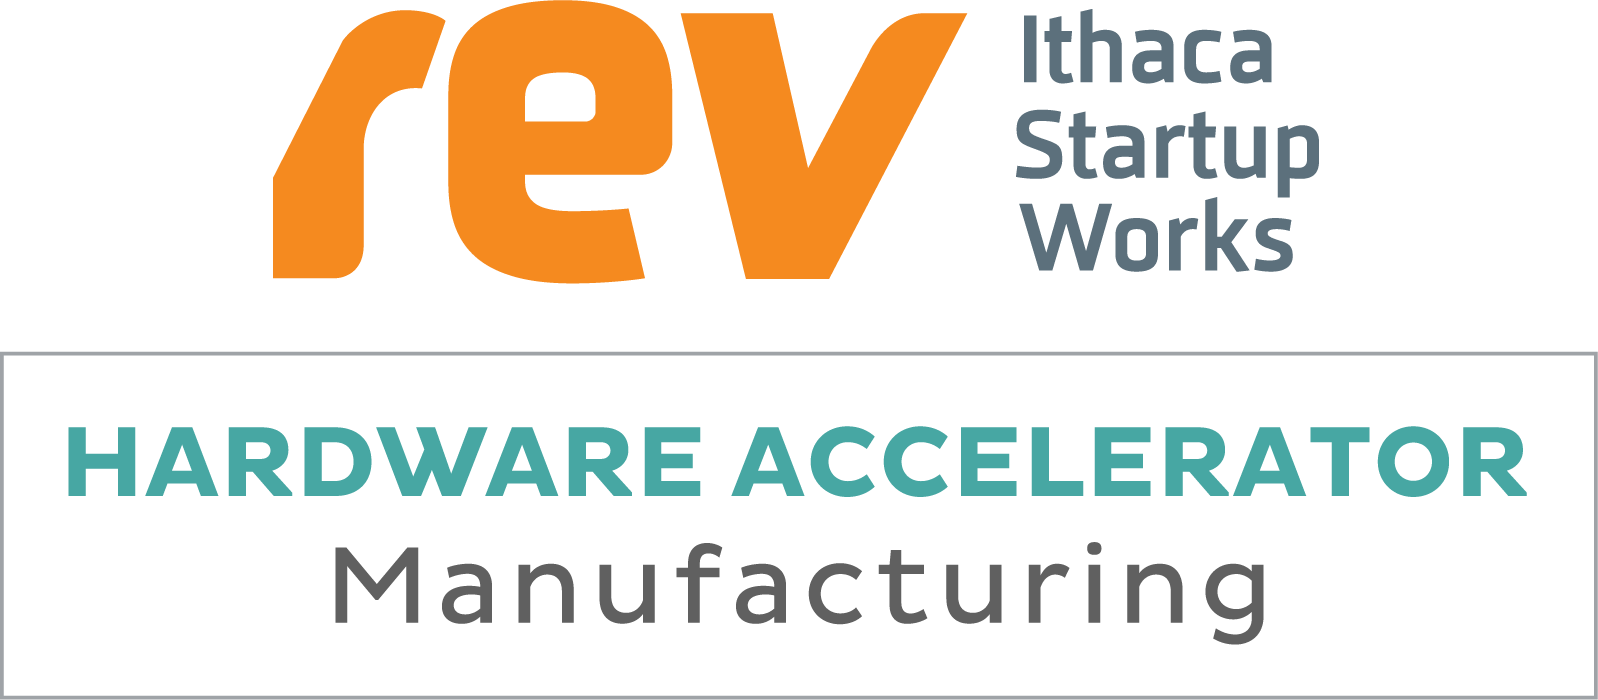 Rev: Ithaca Startup Works Manufacturing Hardware Accelerator Manufacturing